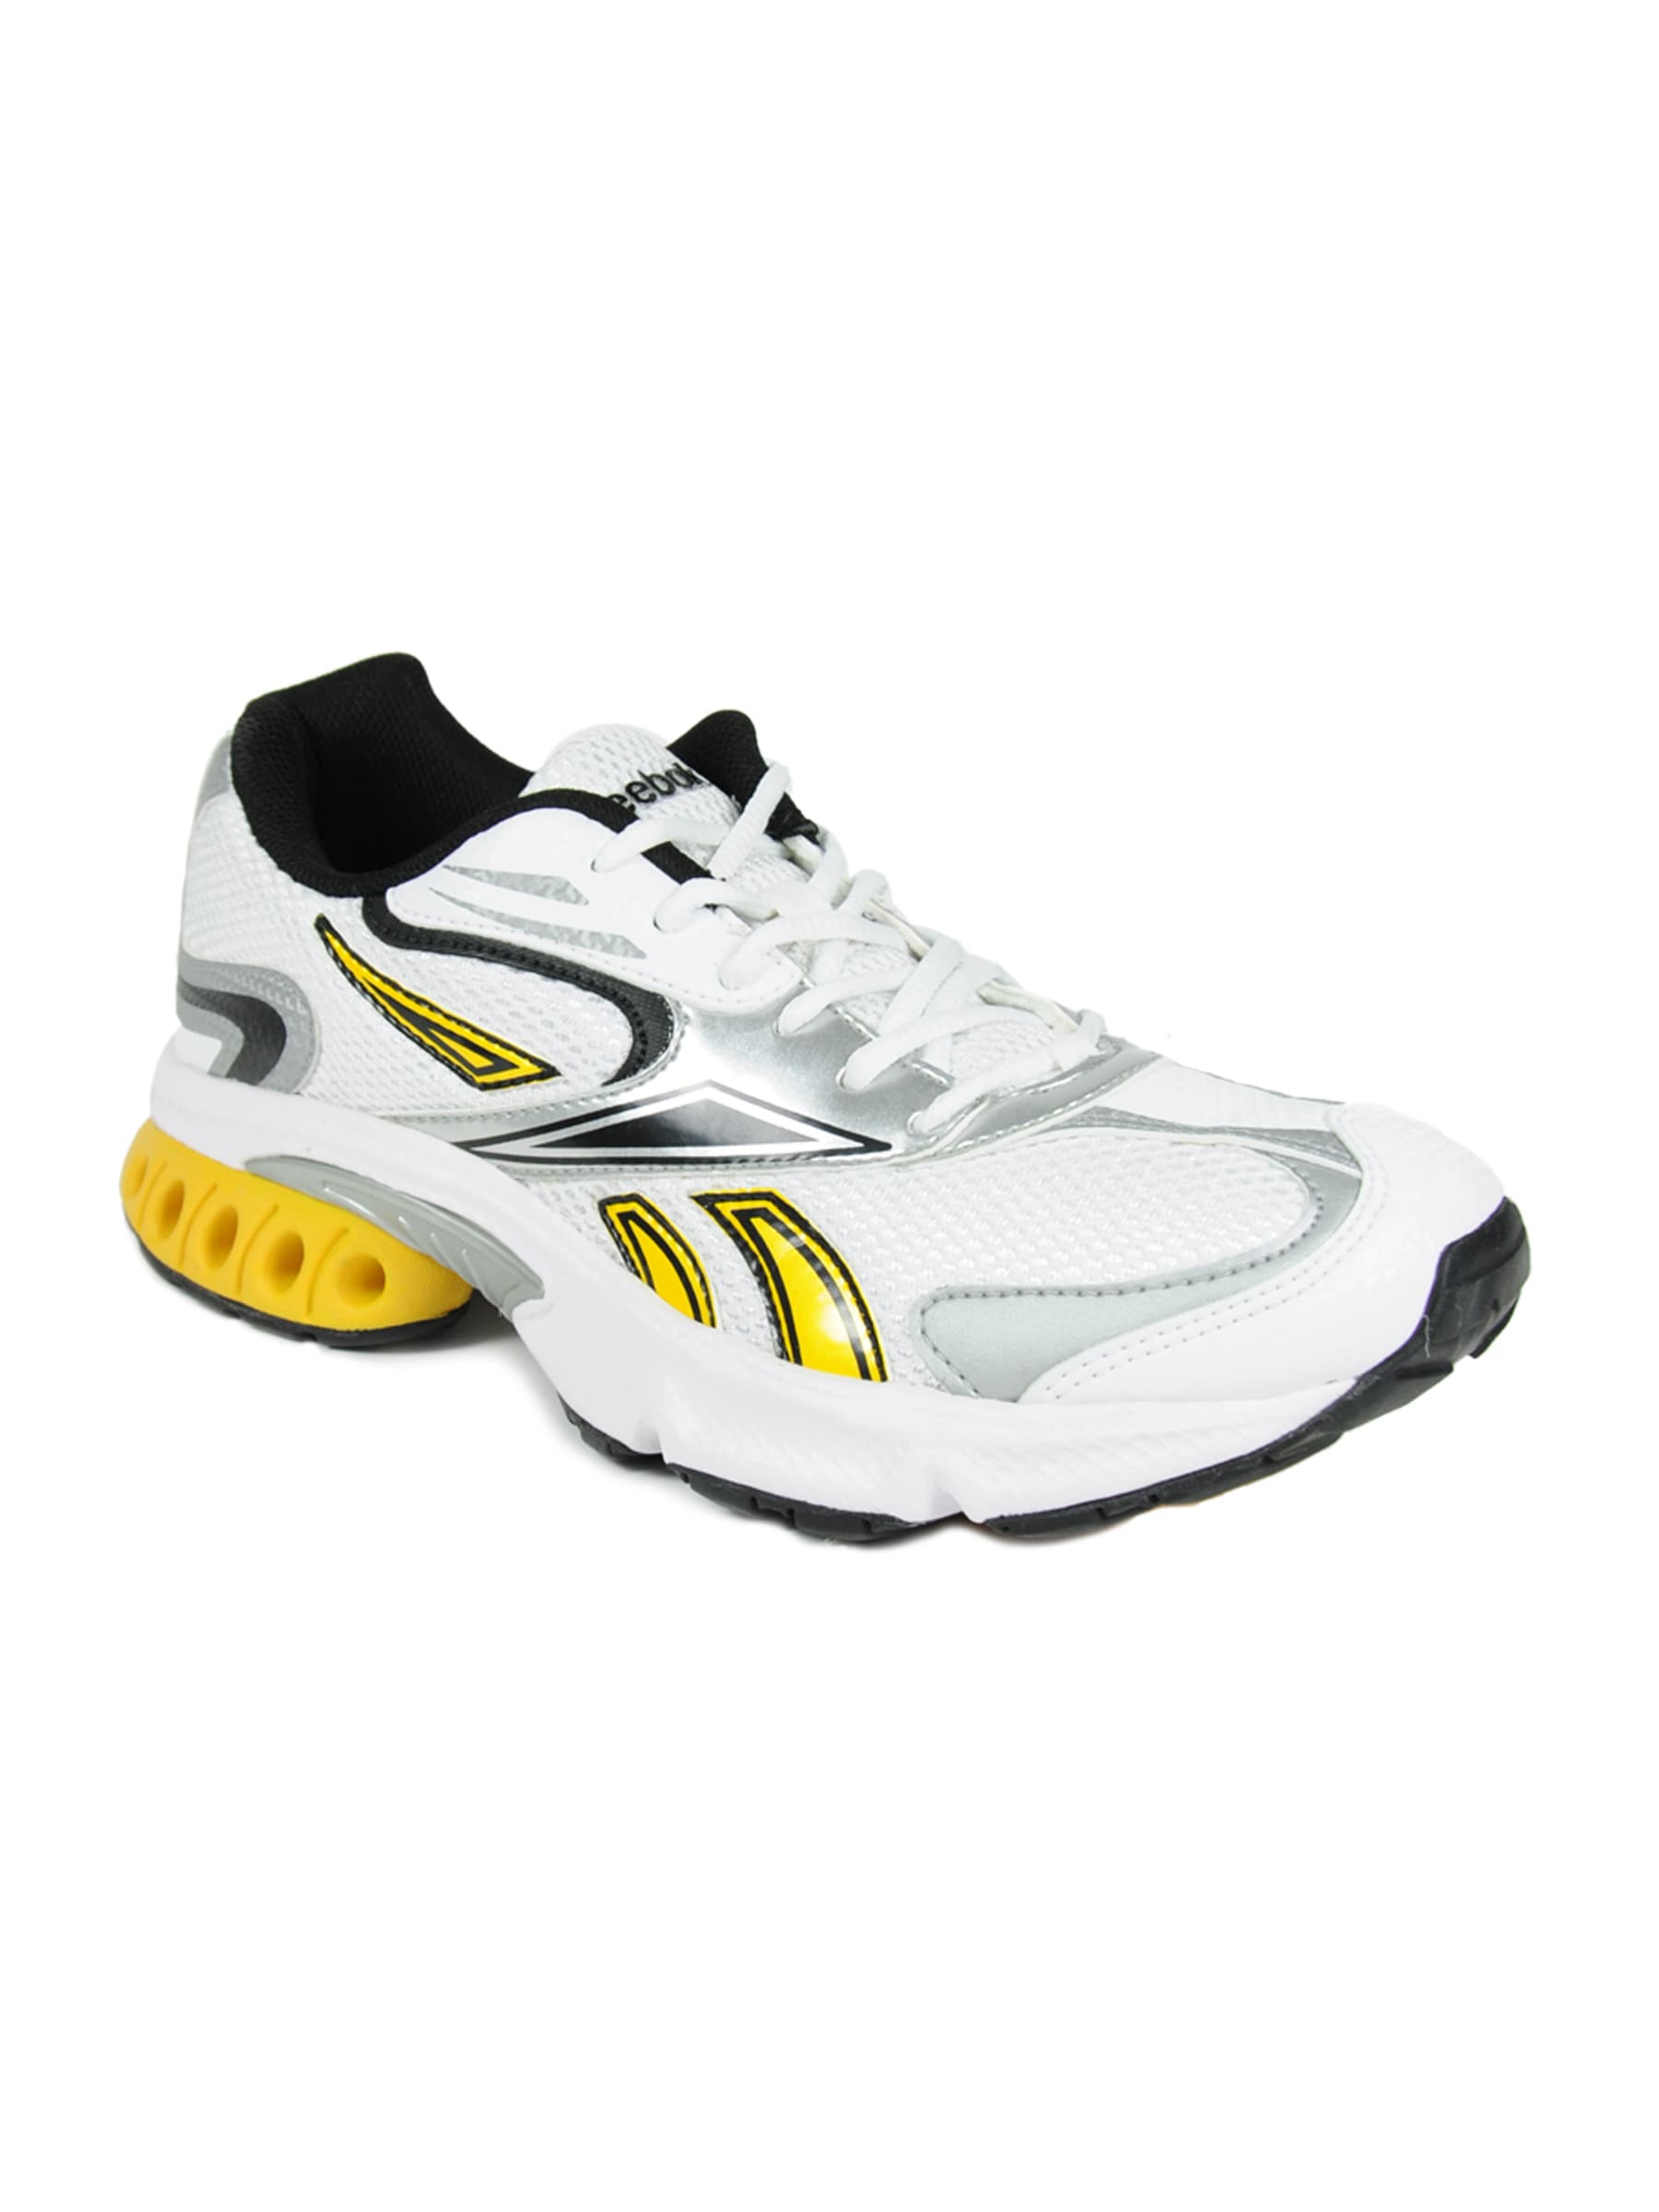 Reebok Men Run Sheer White Sports Shoes